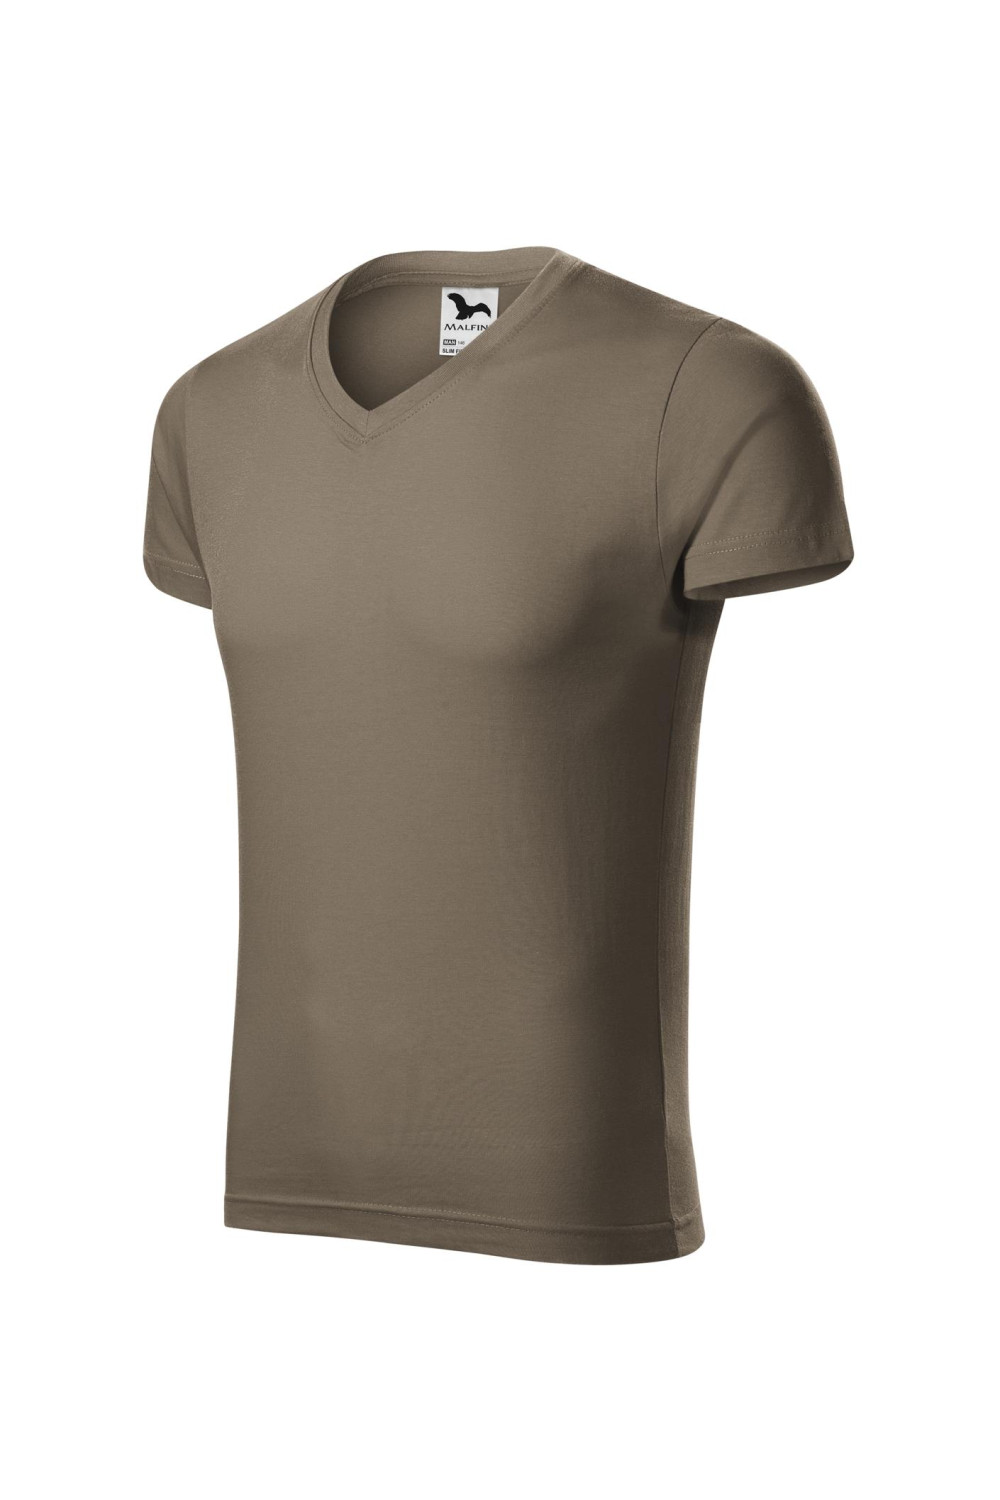 Koszulka męska 100% bawełna t-shirt SLIM FIT V-NECK 146 kolor army